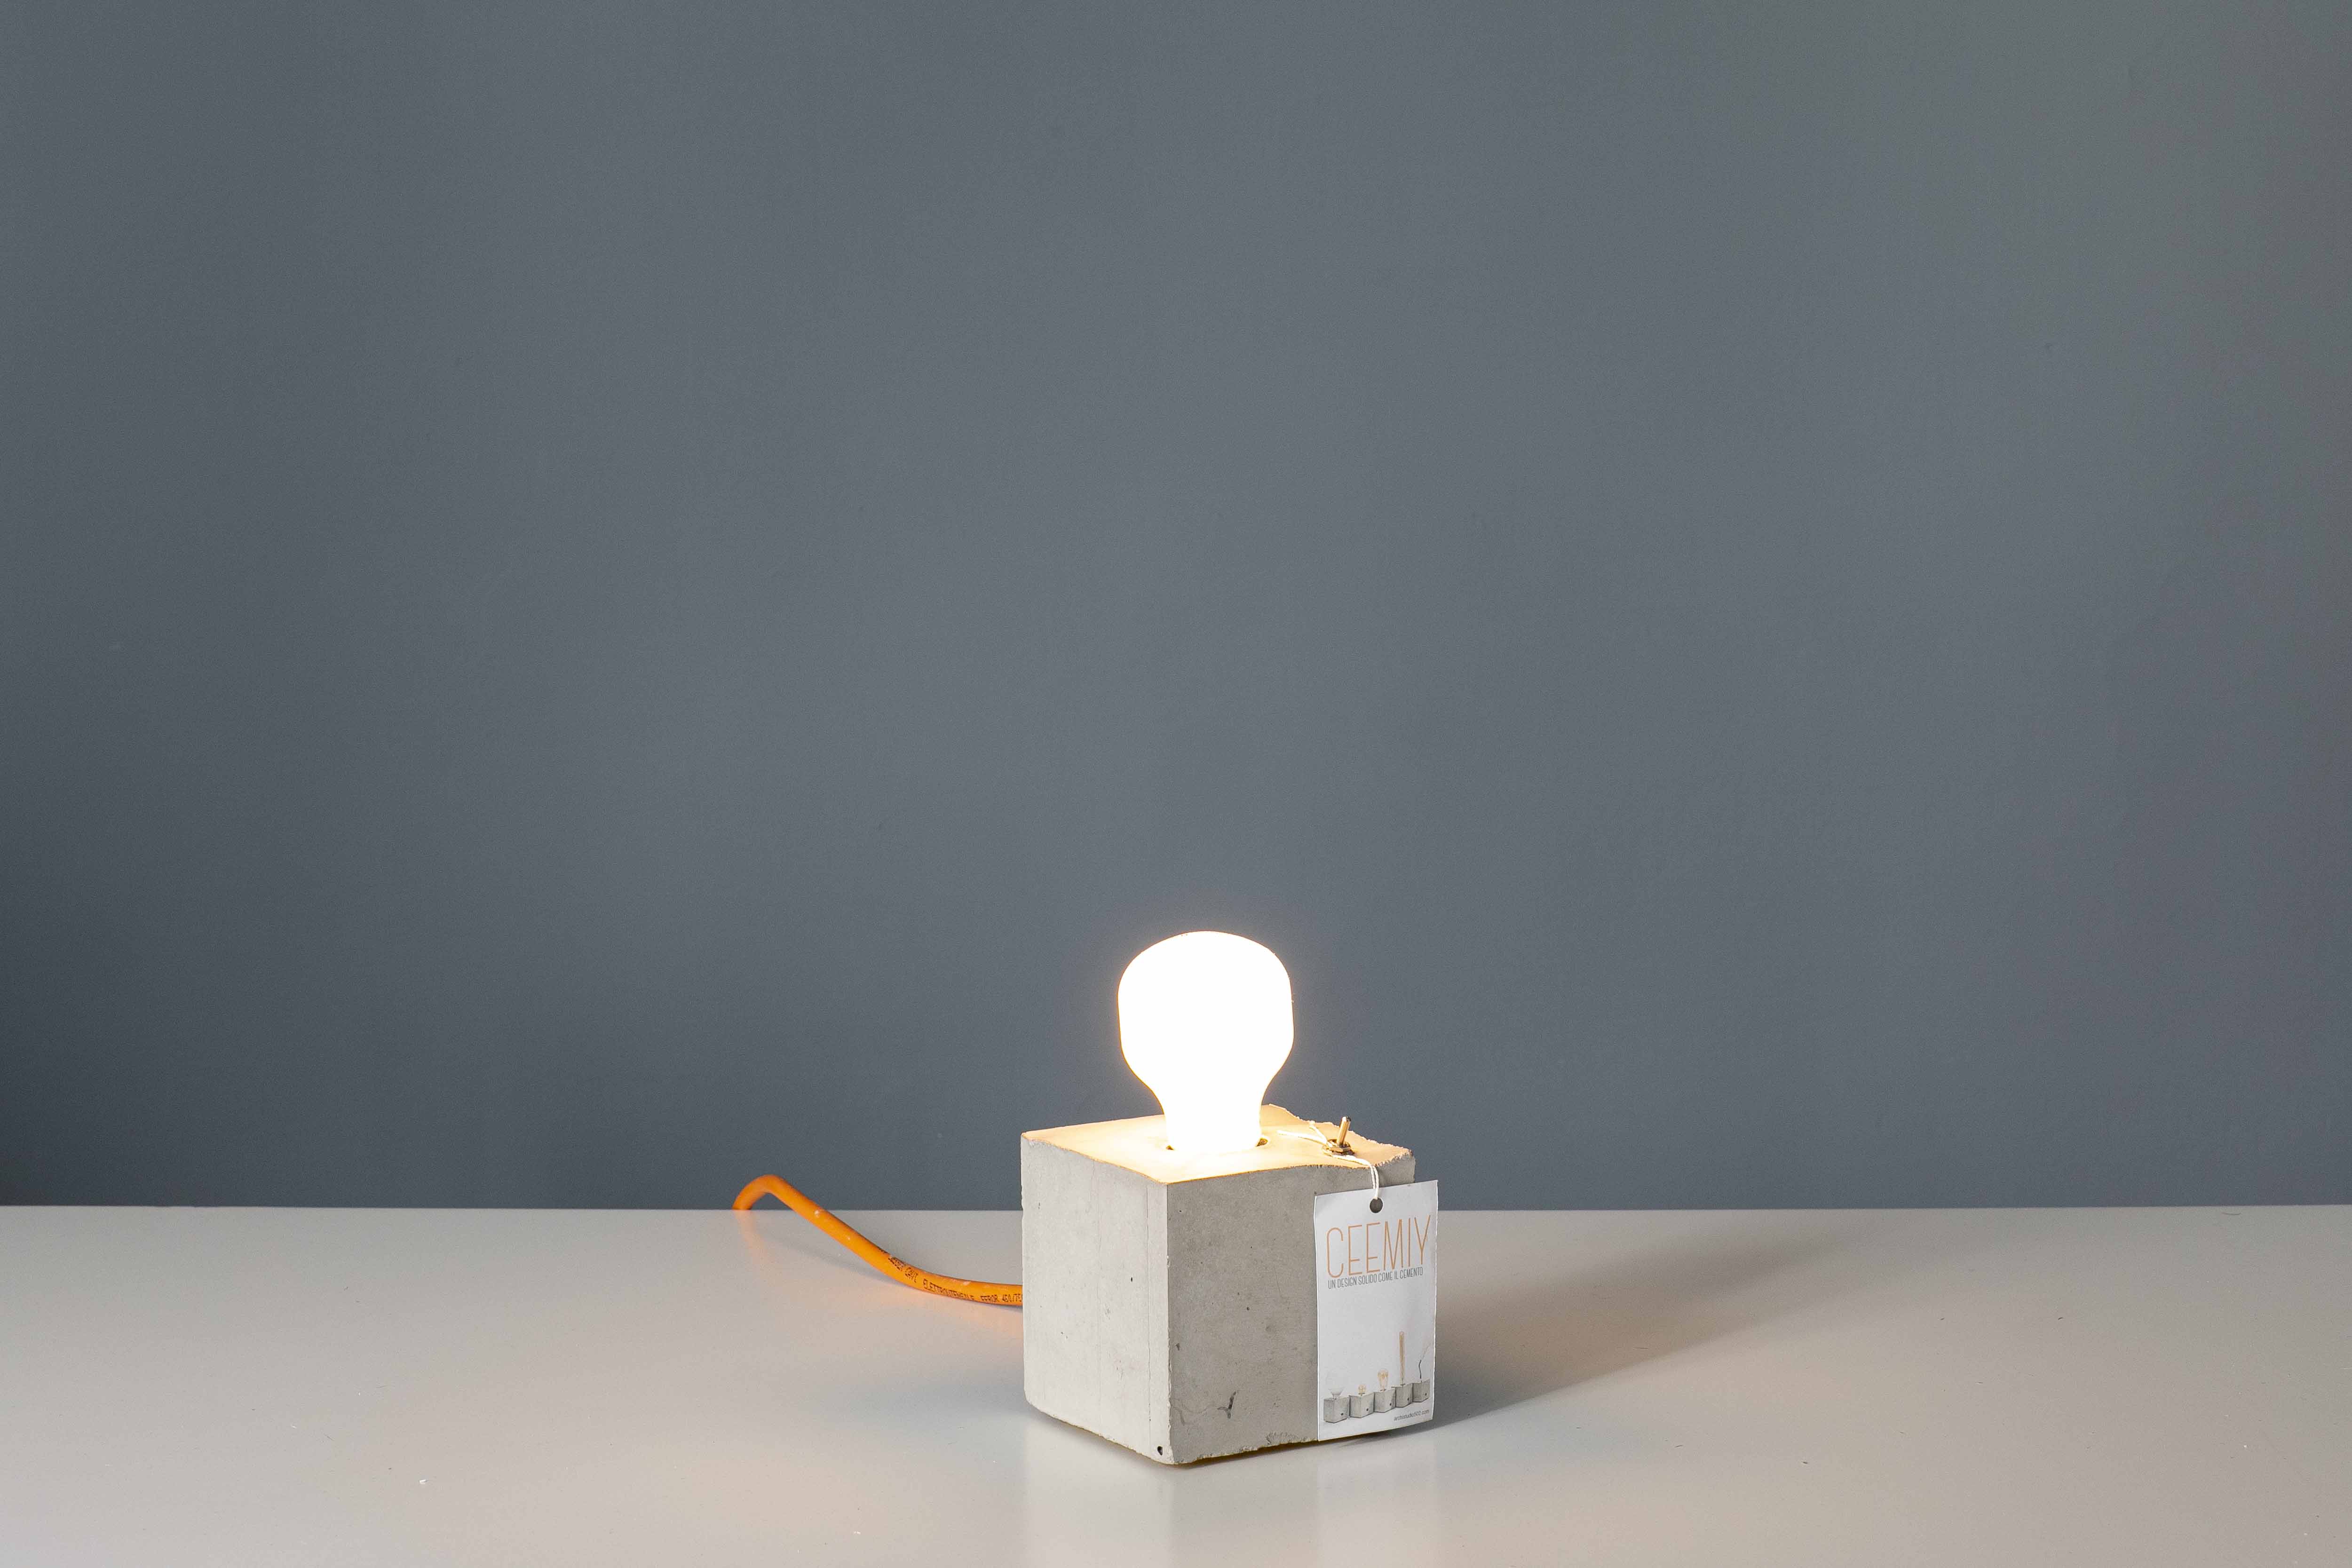 Ceemiy | Linea lampade DIY